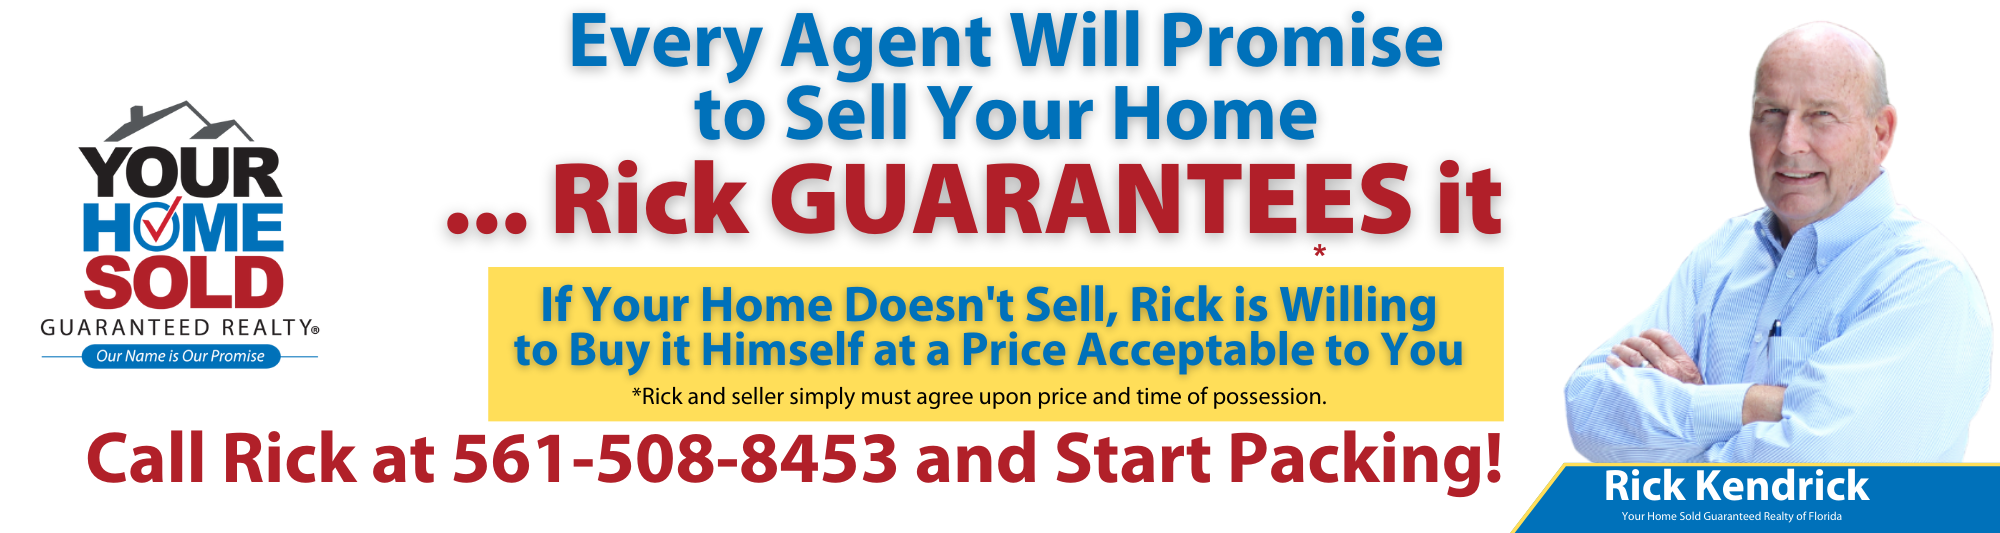 Rick Kendrick Home Seller Guaranteed Sale Program